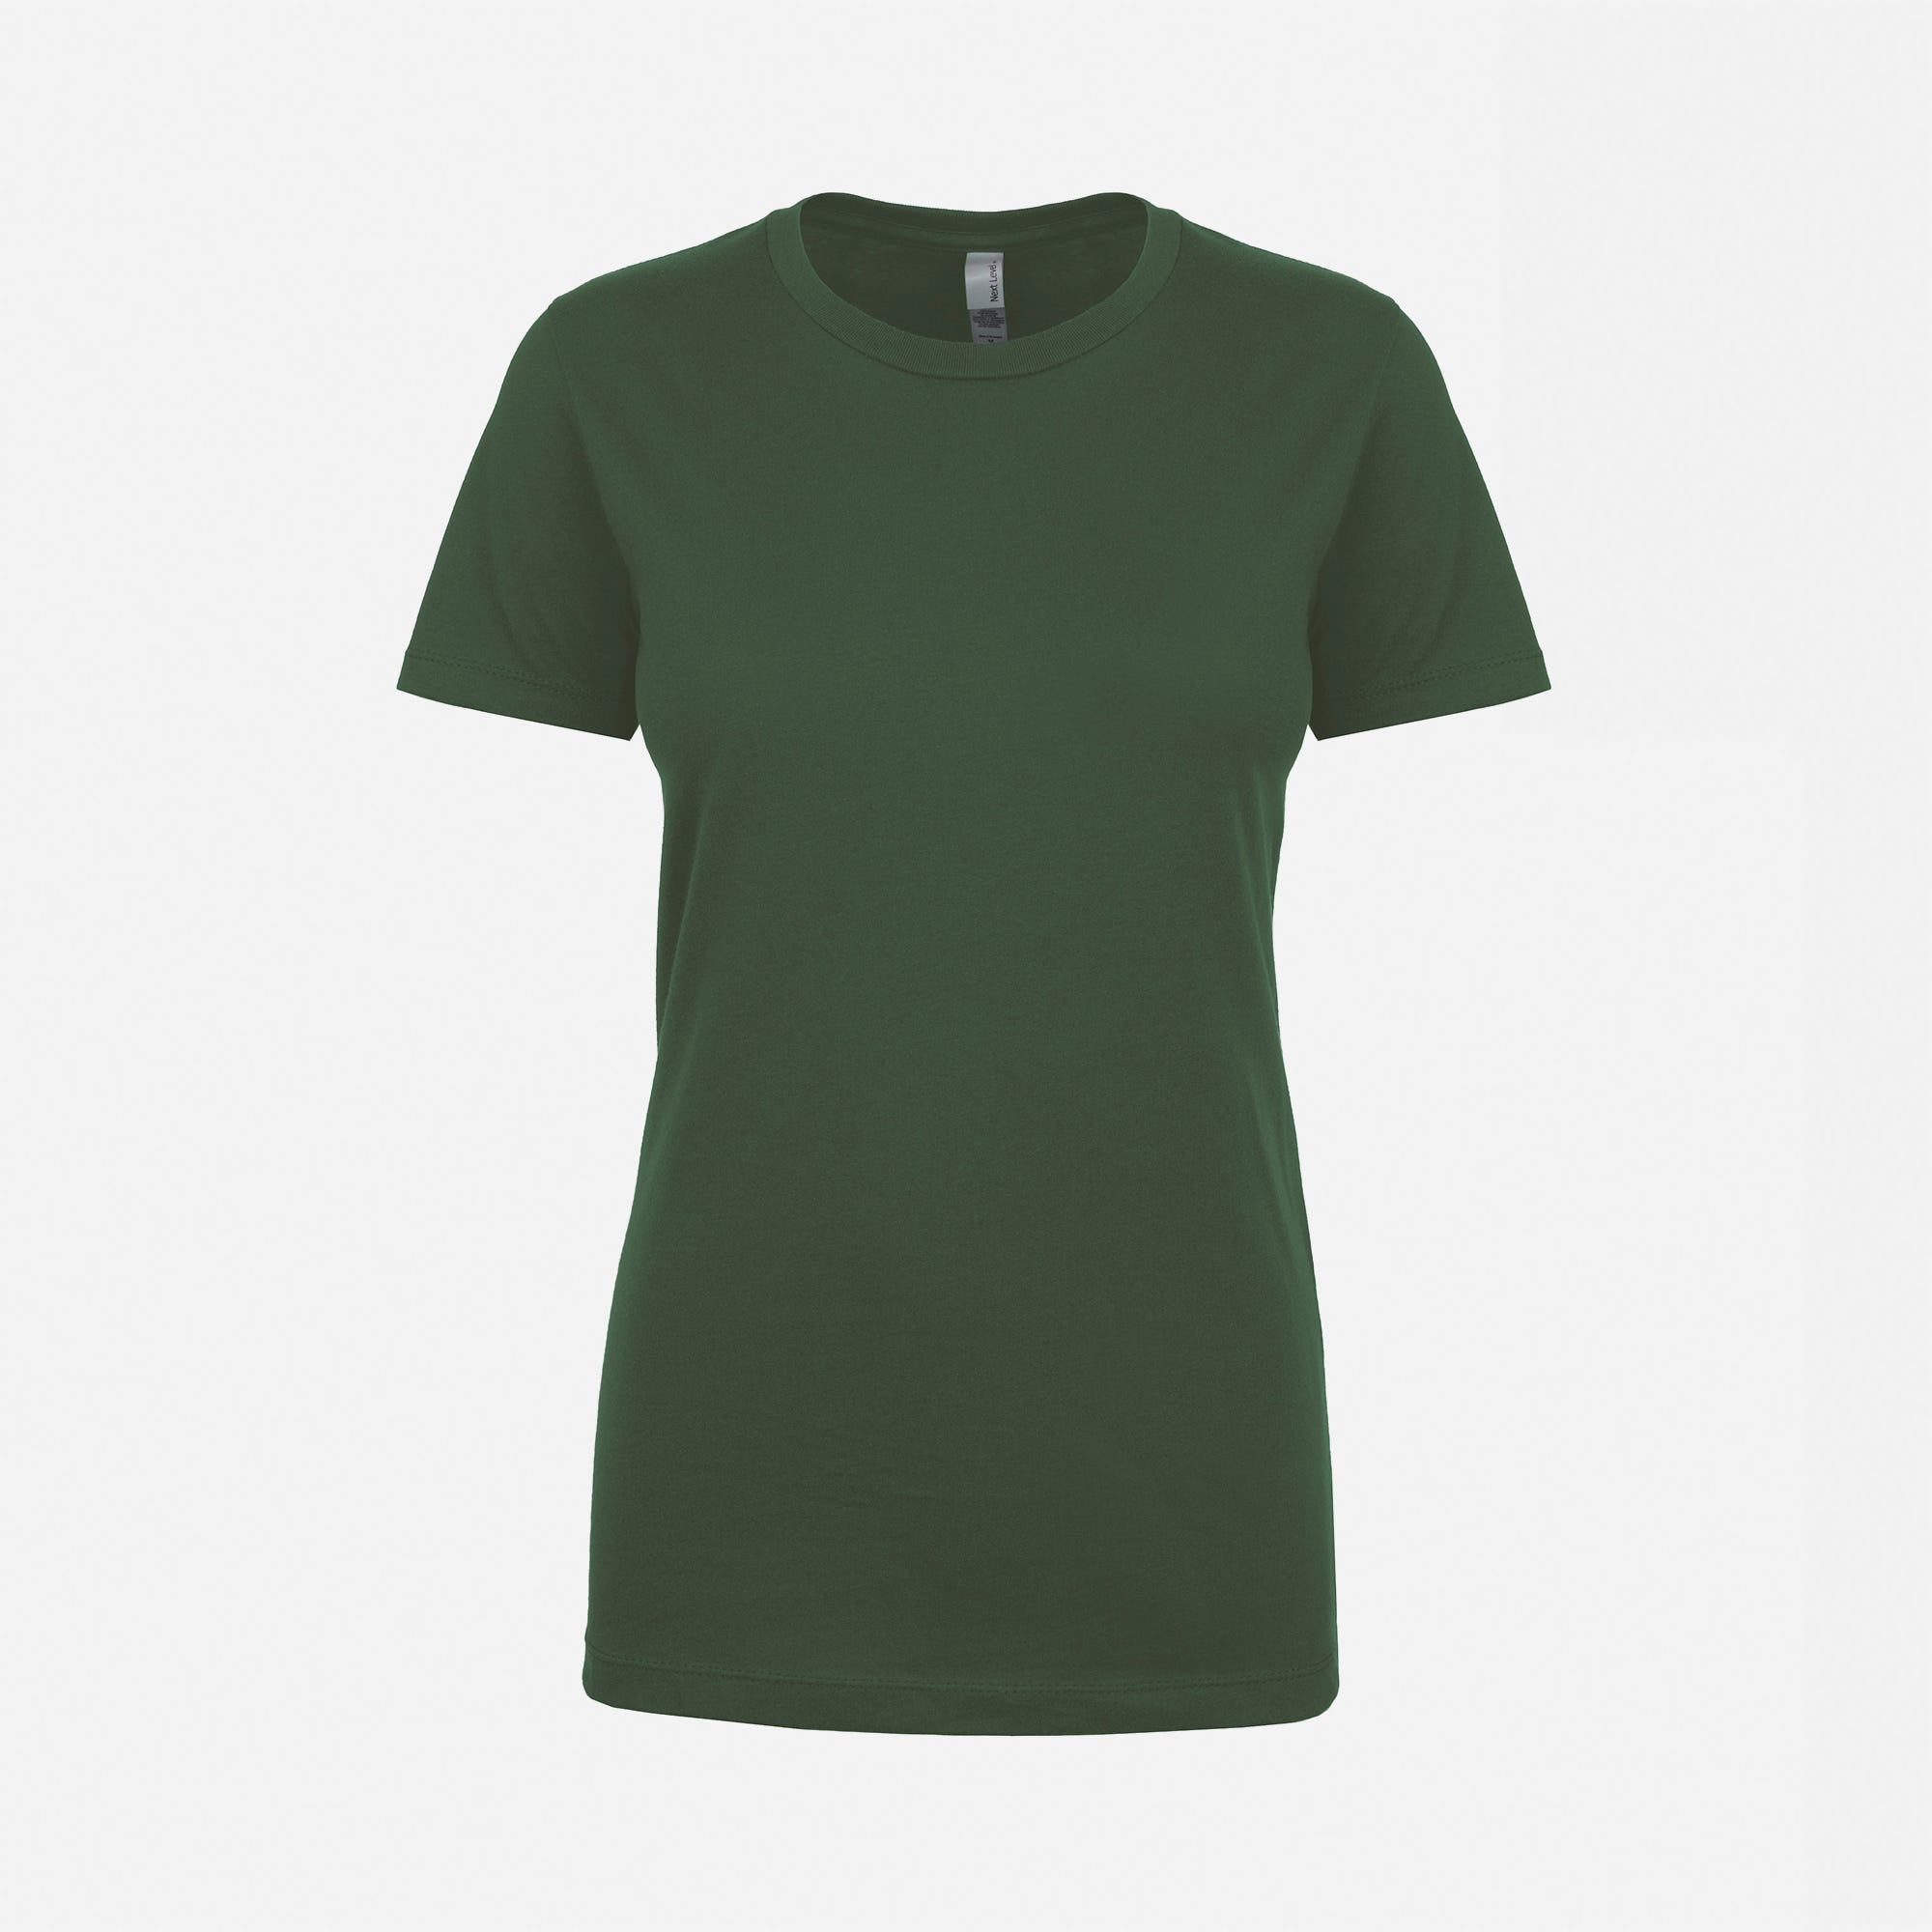 Cotton Boyfriend T-Shirt Forest Green 3900 Next Level Apparel Sample Front View